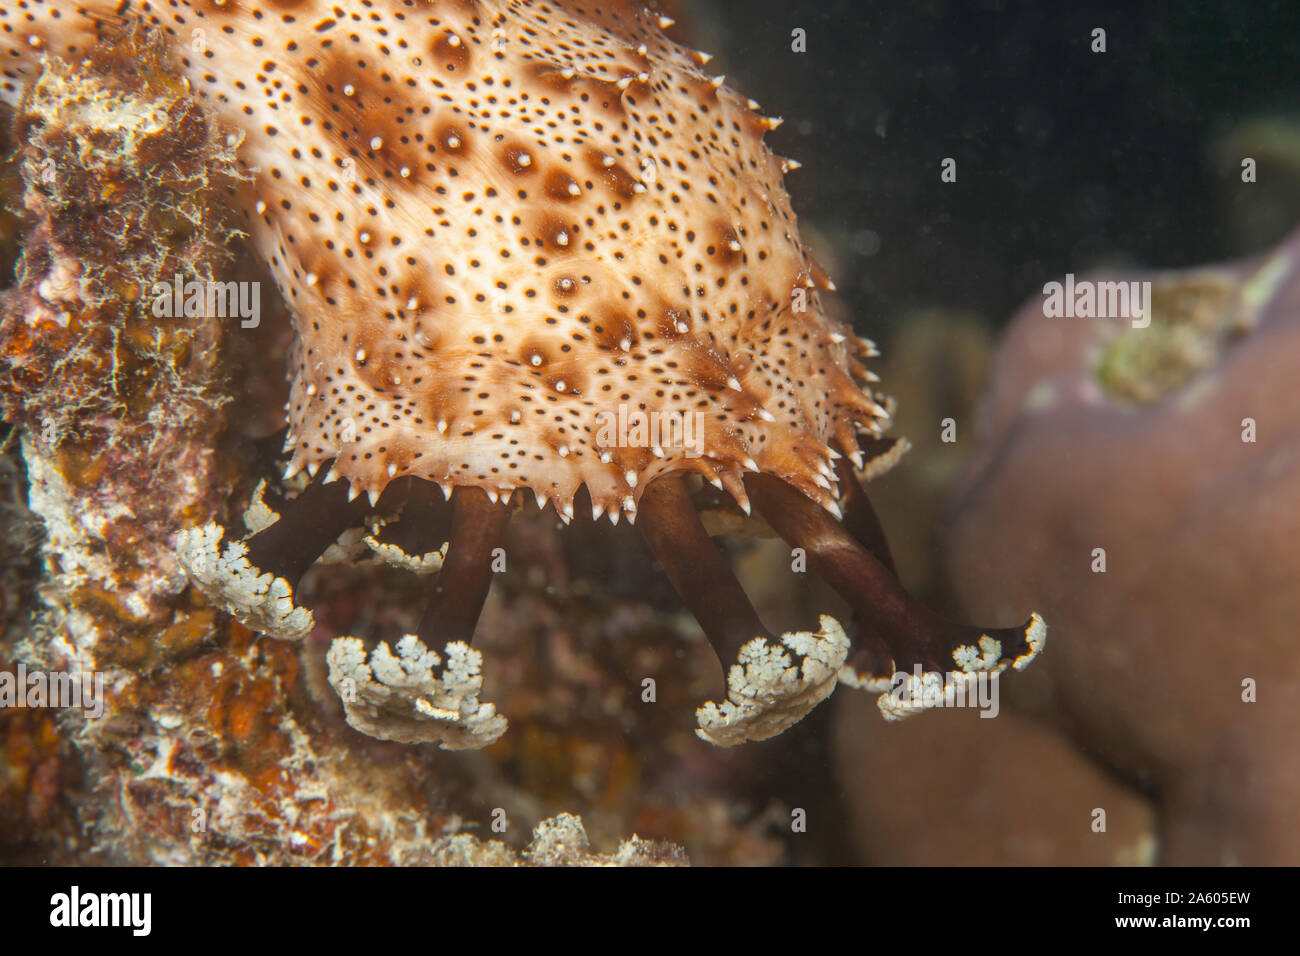 Graeff's Sea Cucumber, Pearsonothuria graeffei, previously known as Bohadschia graeffei. Showing the tentacles of this adult Holothurian feeding. Fiji Stock Photo